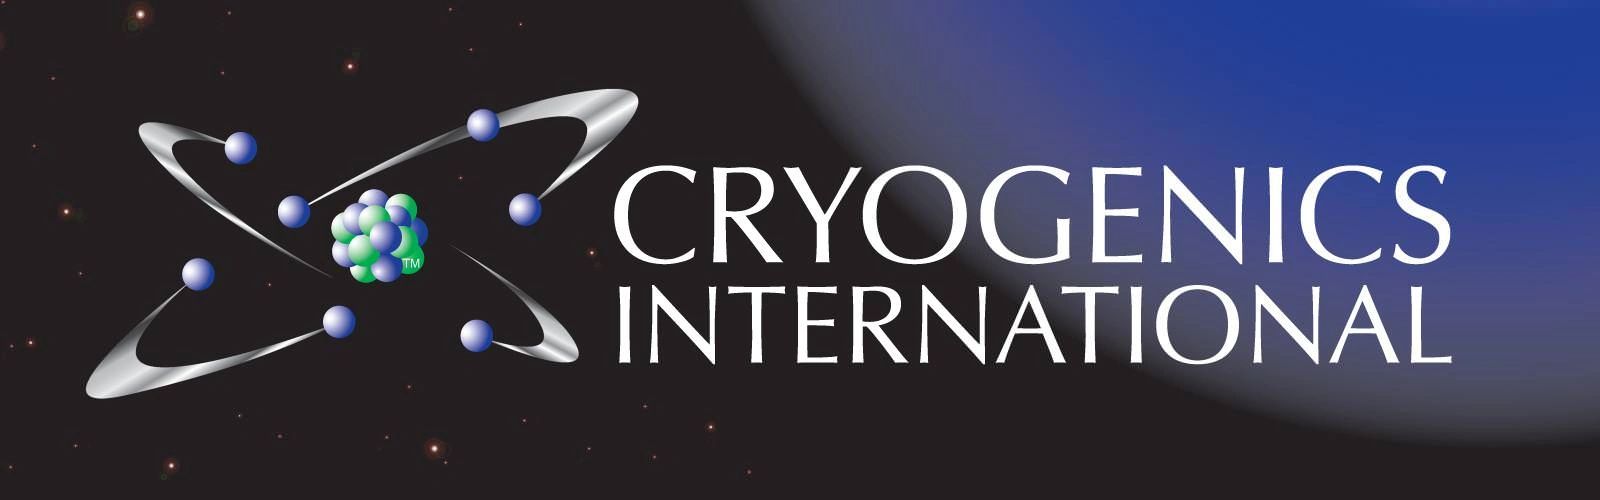 Cryogenics international banner